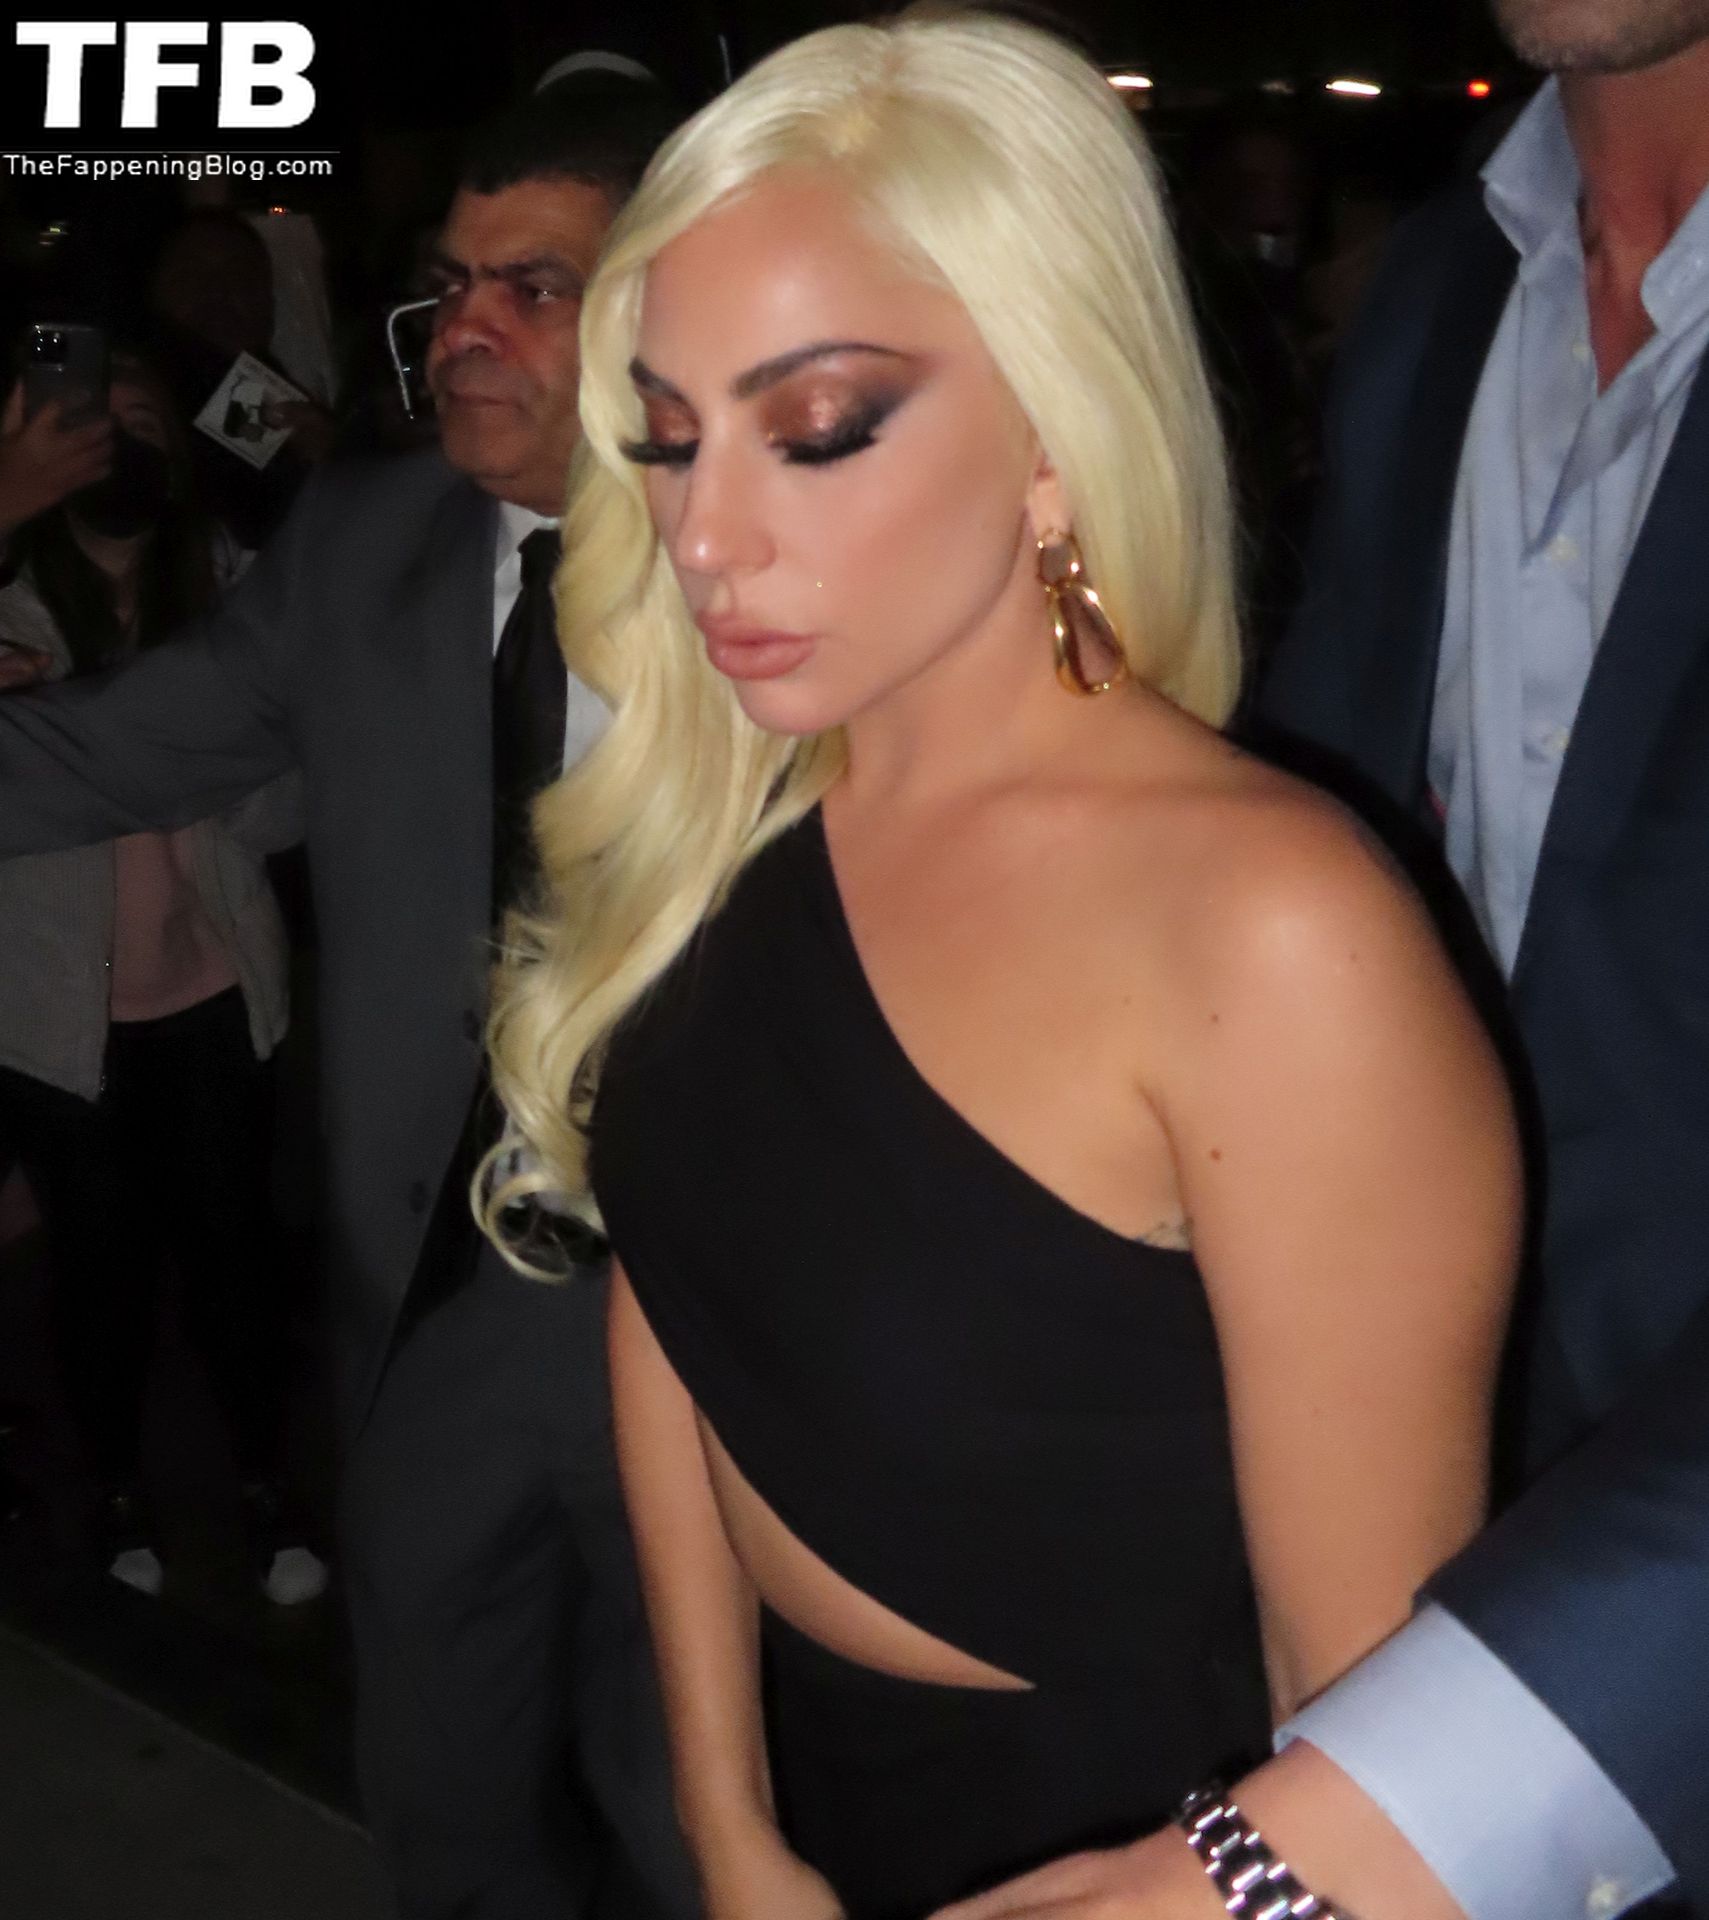 Lady-Gaga-Sexy-The-Fappening-Blog-48-1.jpg